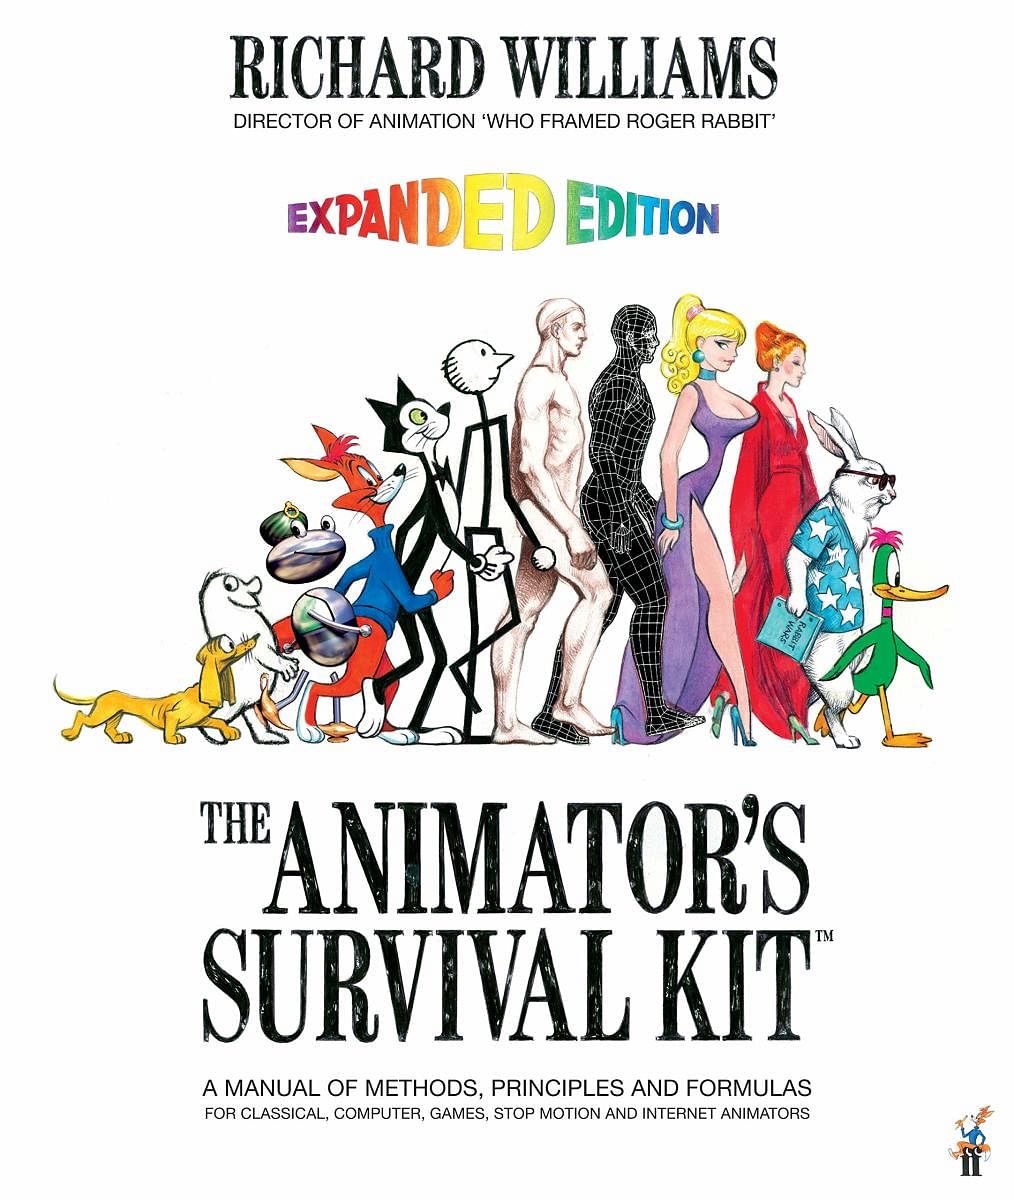 The Animators Survival Kit by Richard Williams